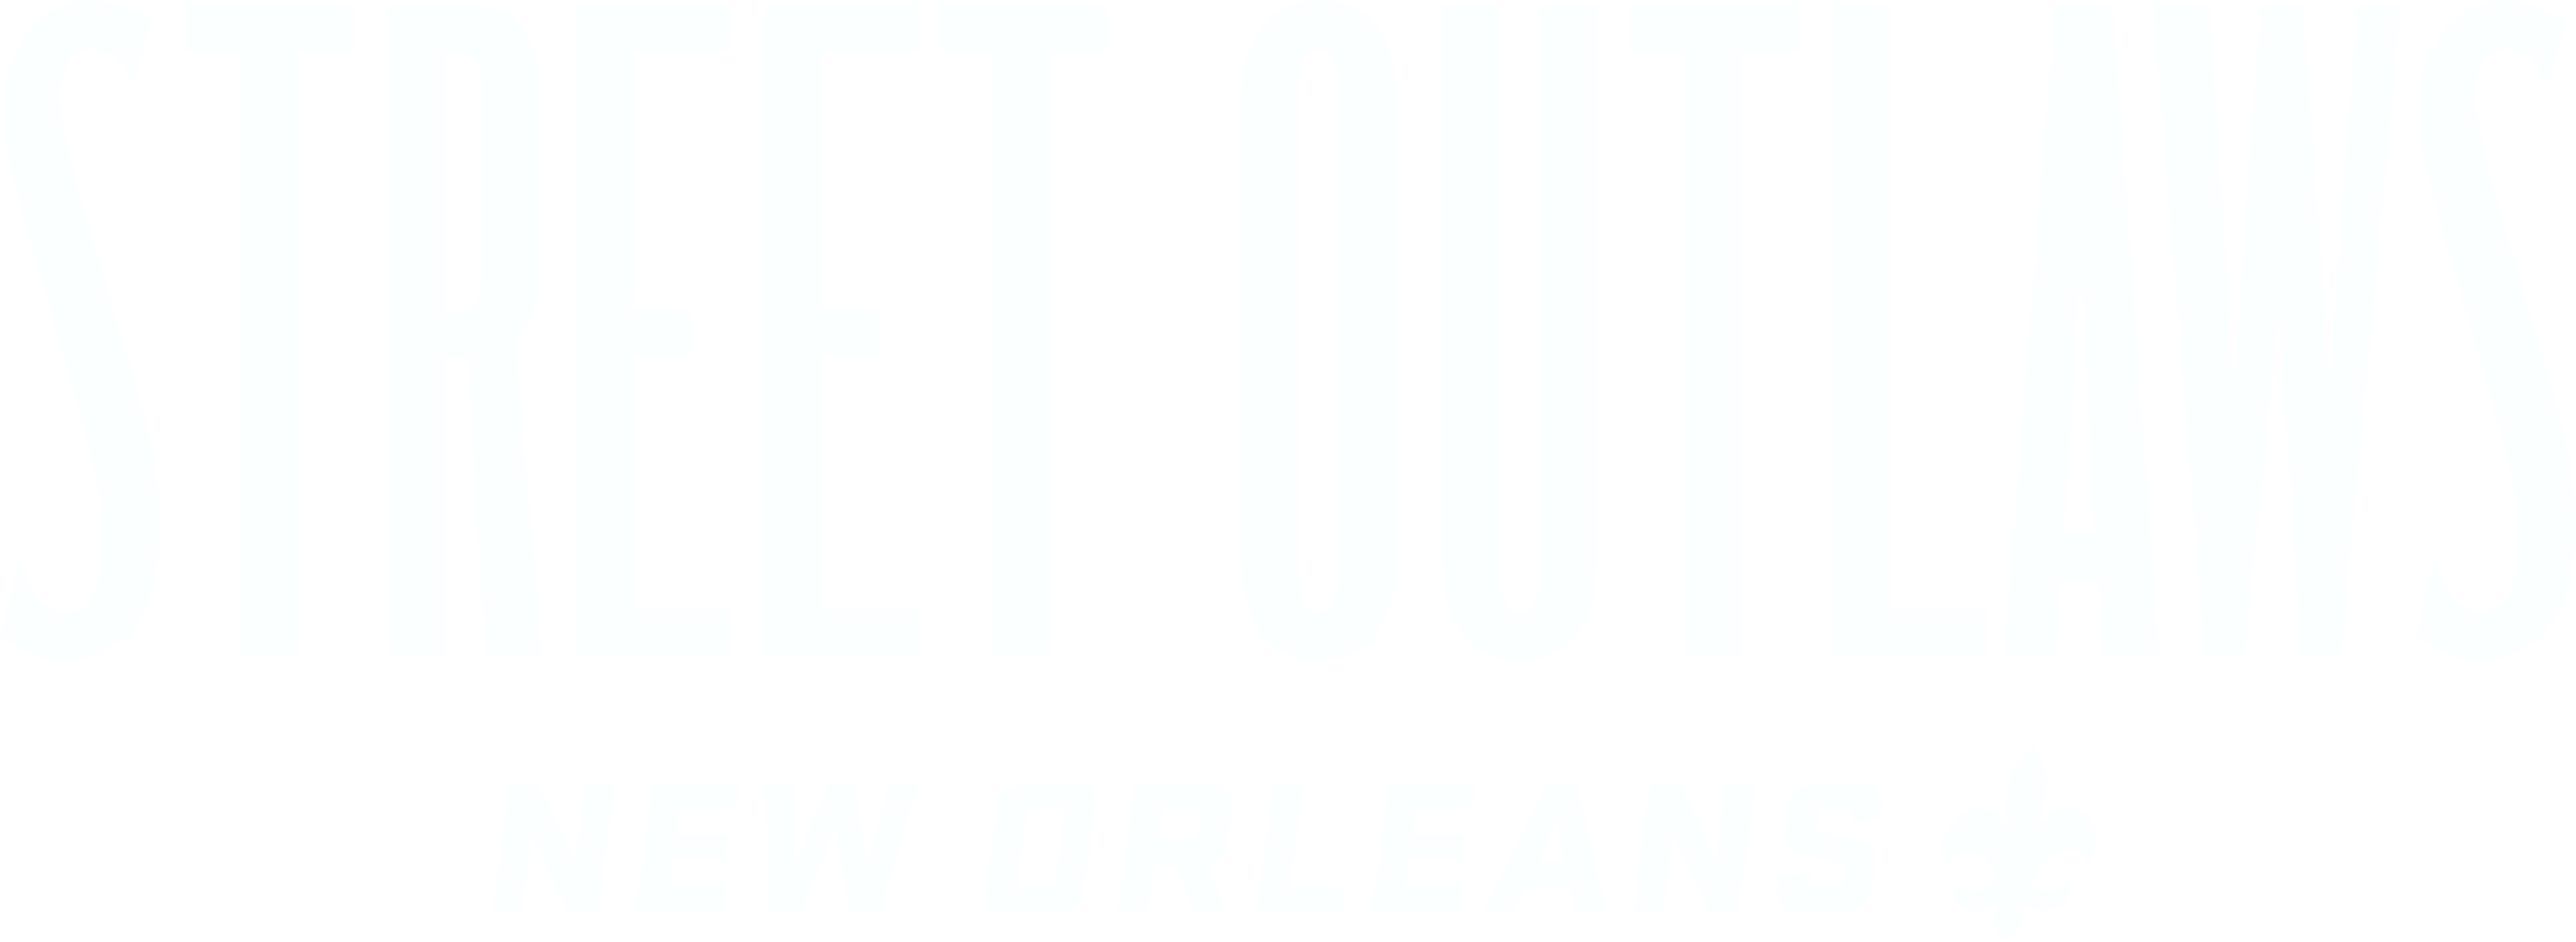 Street Outlaws: New Orleans logo